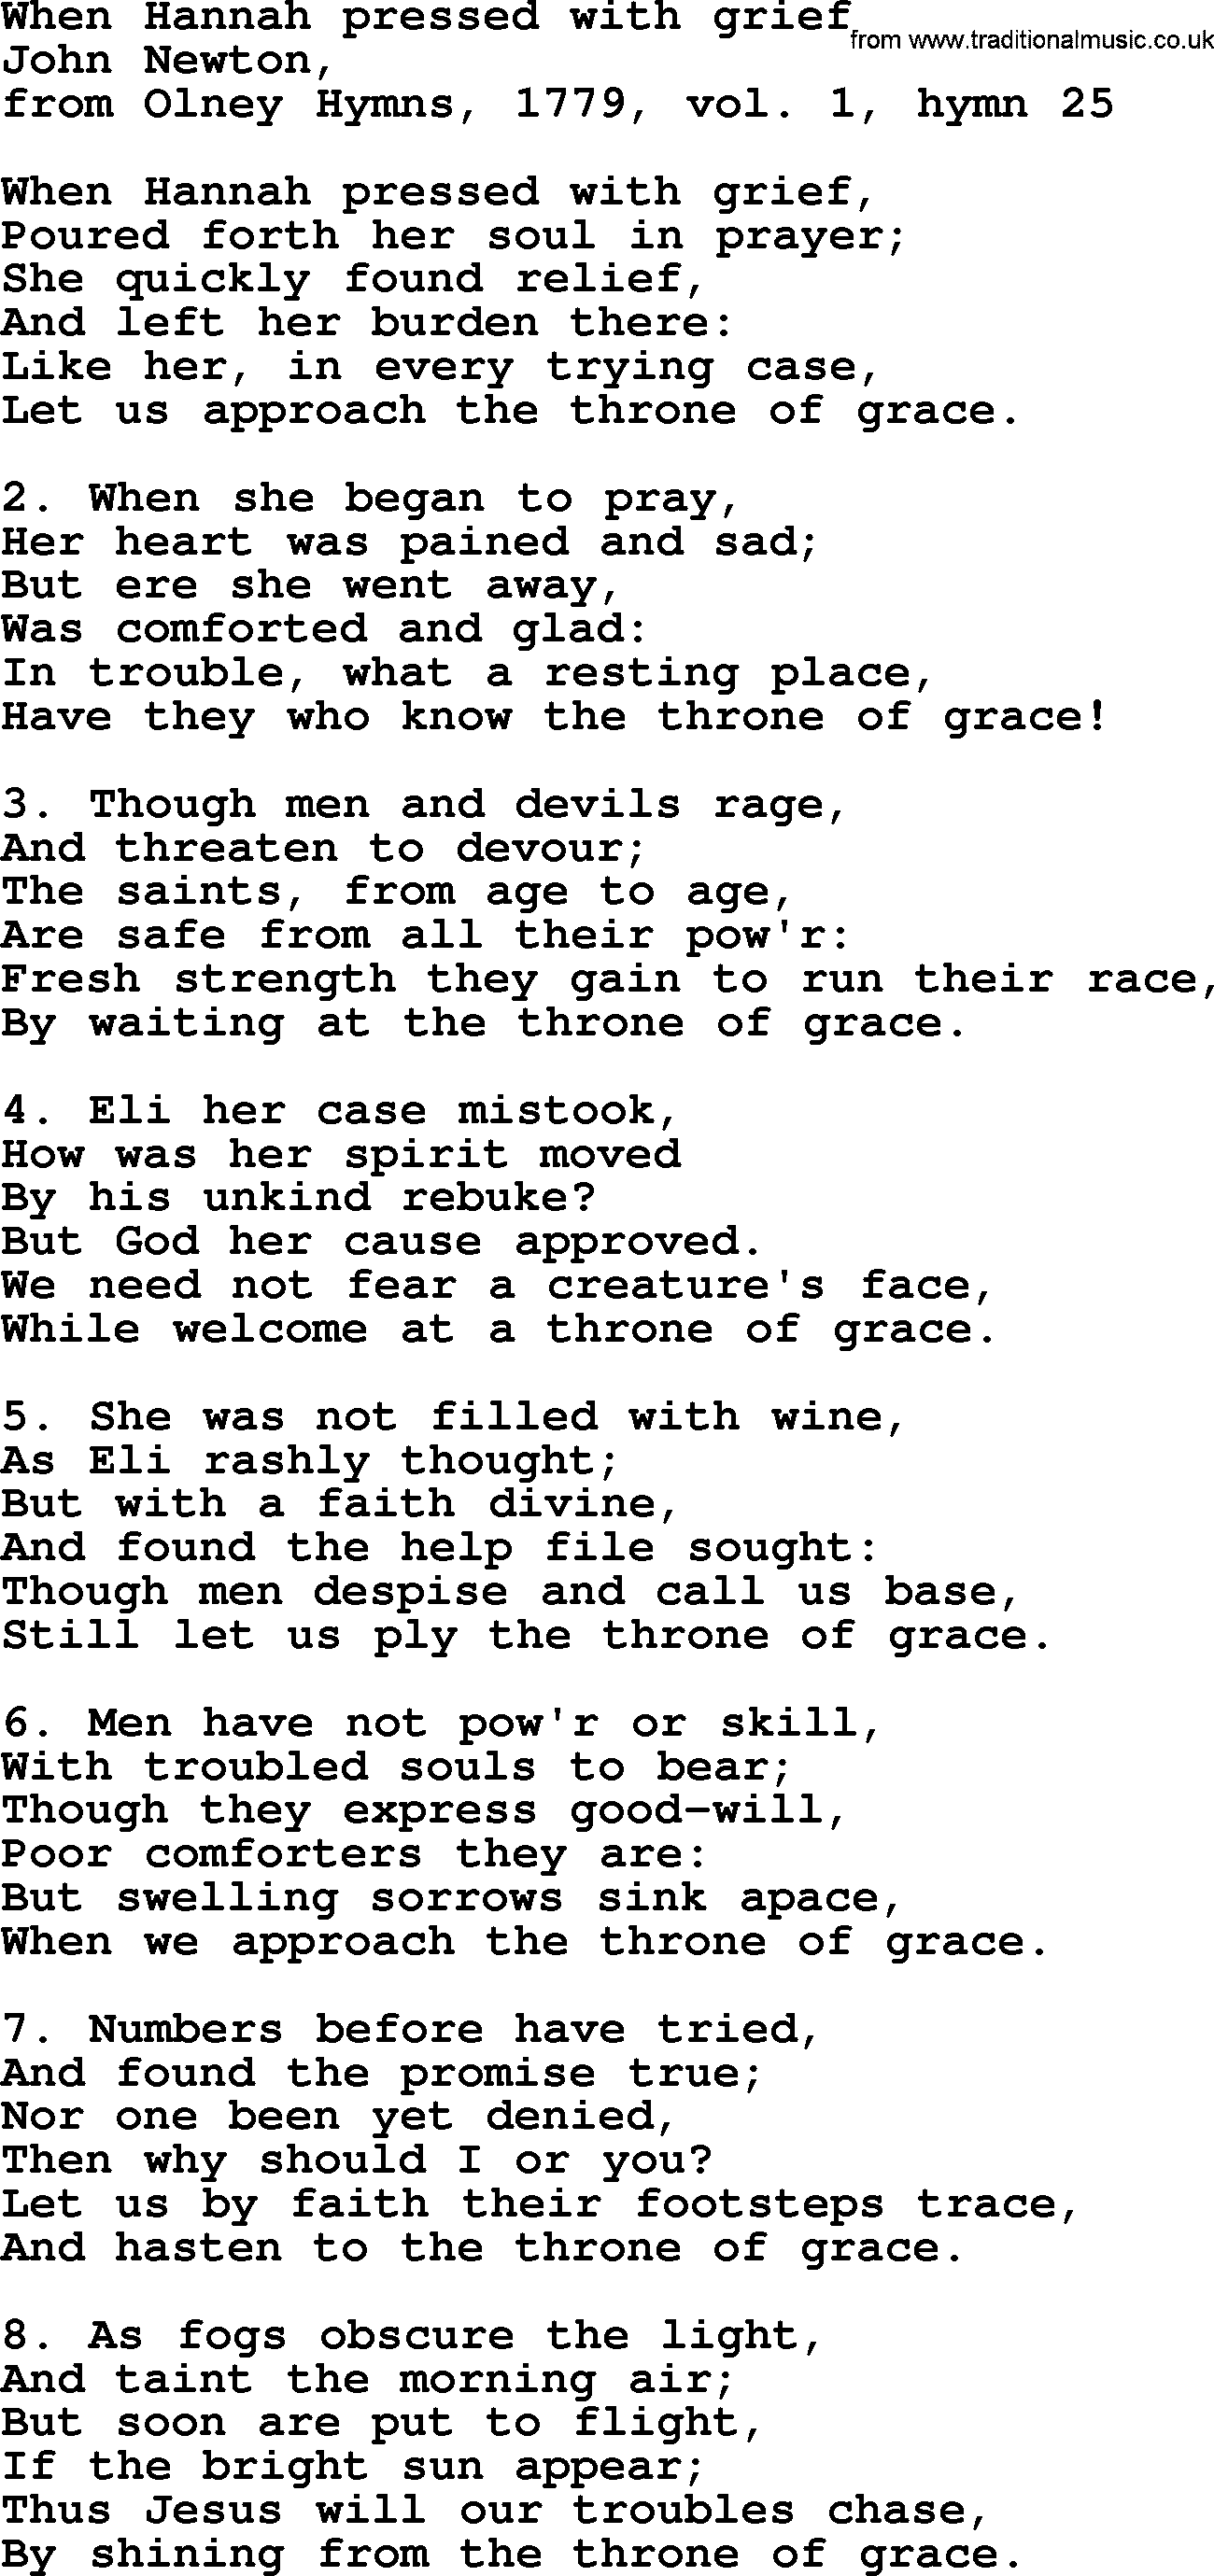 John Newton hymn: When Hannah Pressed With Grief, lyrics